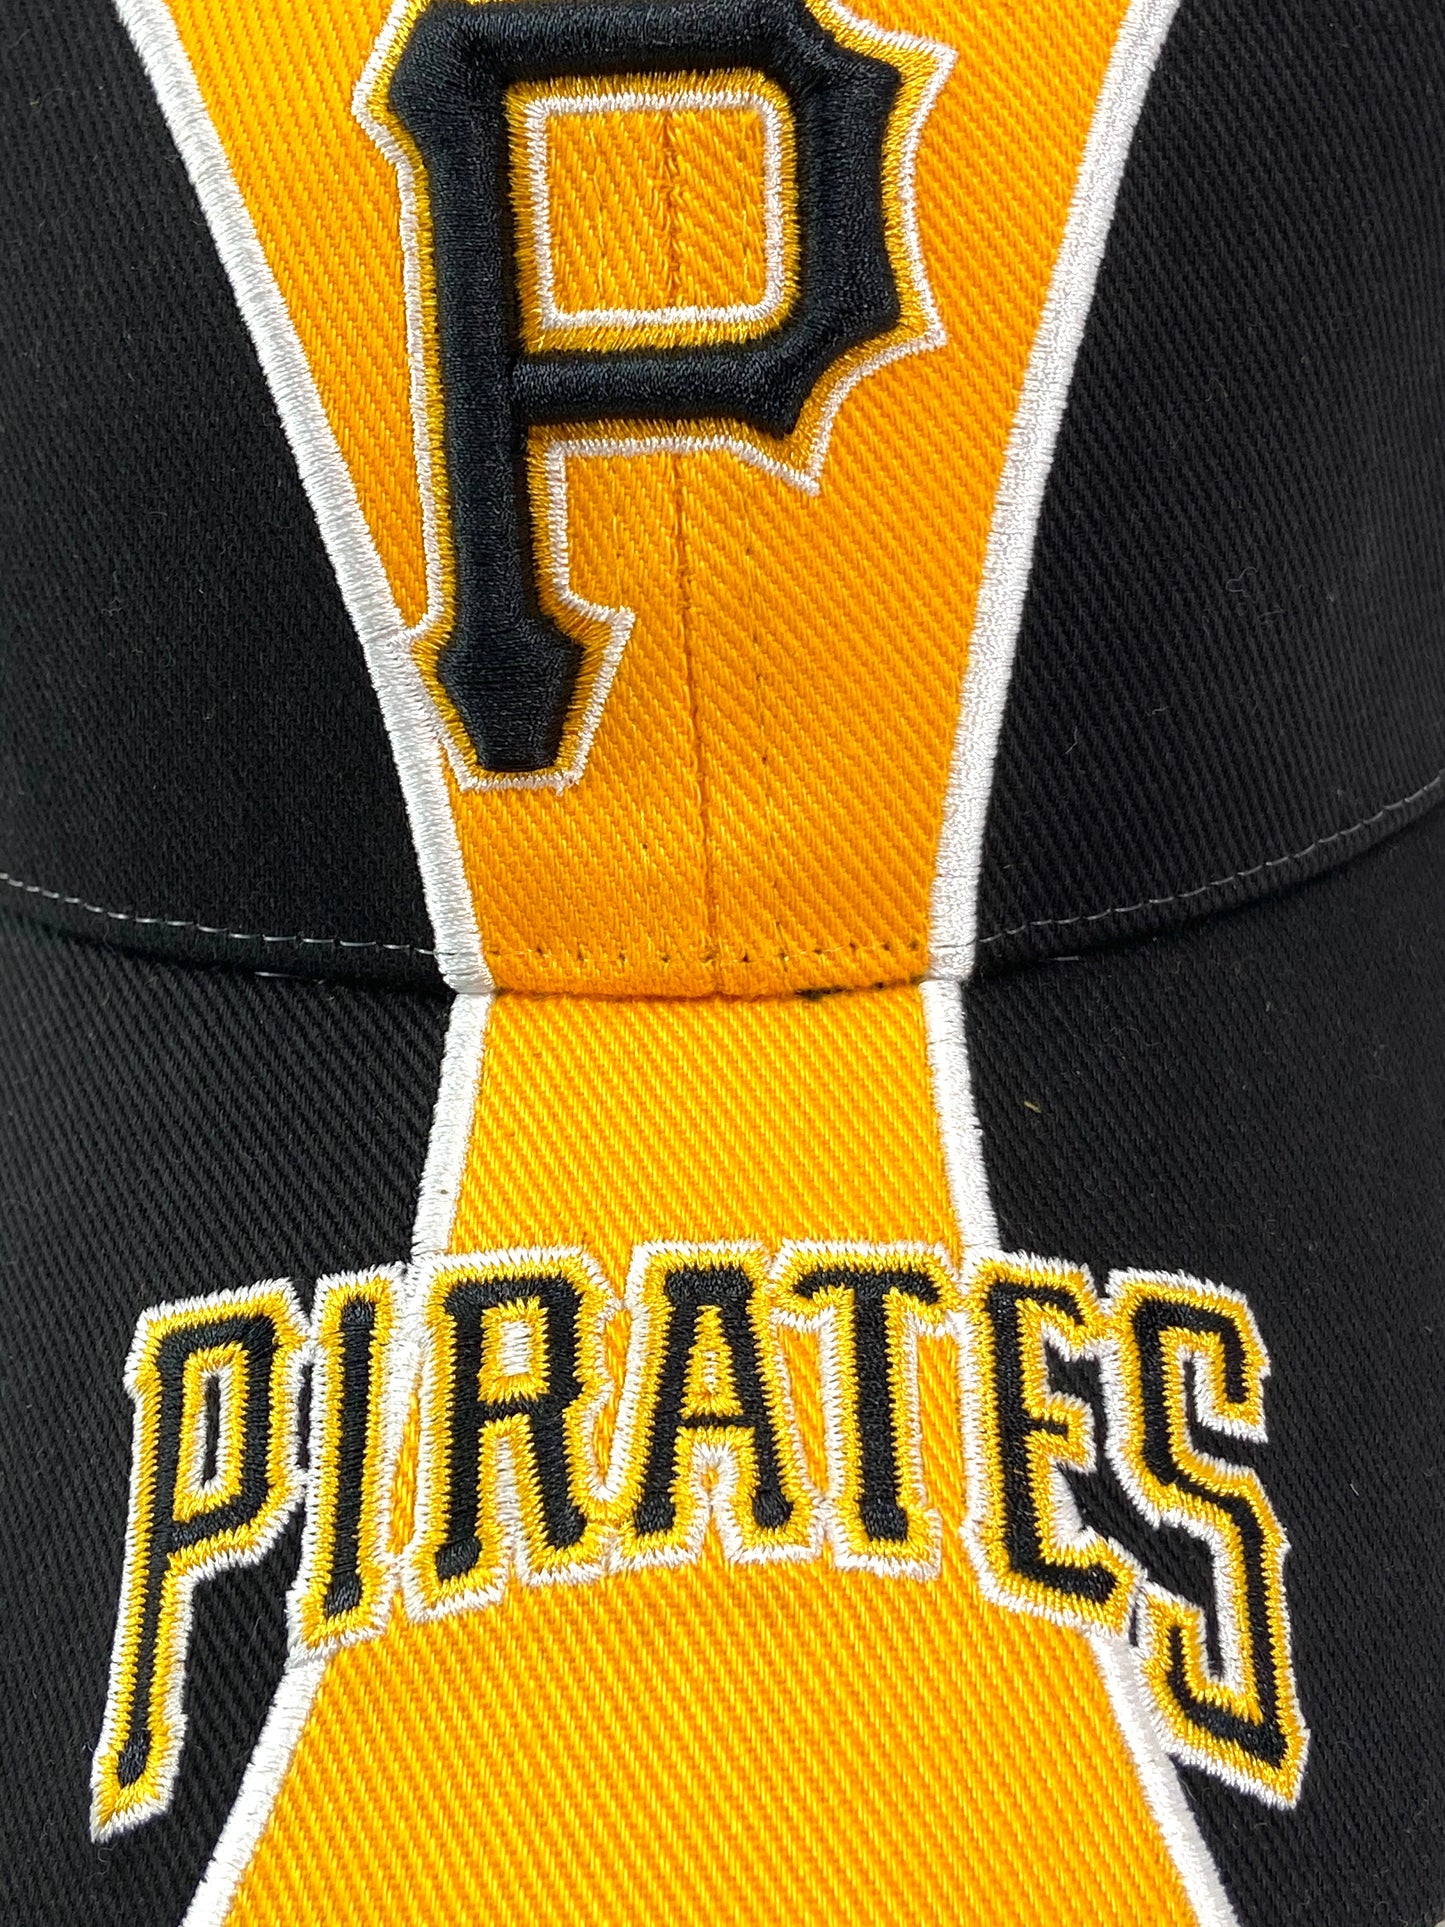 Pittsburgh Pirates NOS Vintage MLB Two-Tone Cap by Twins Enterprise